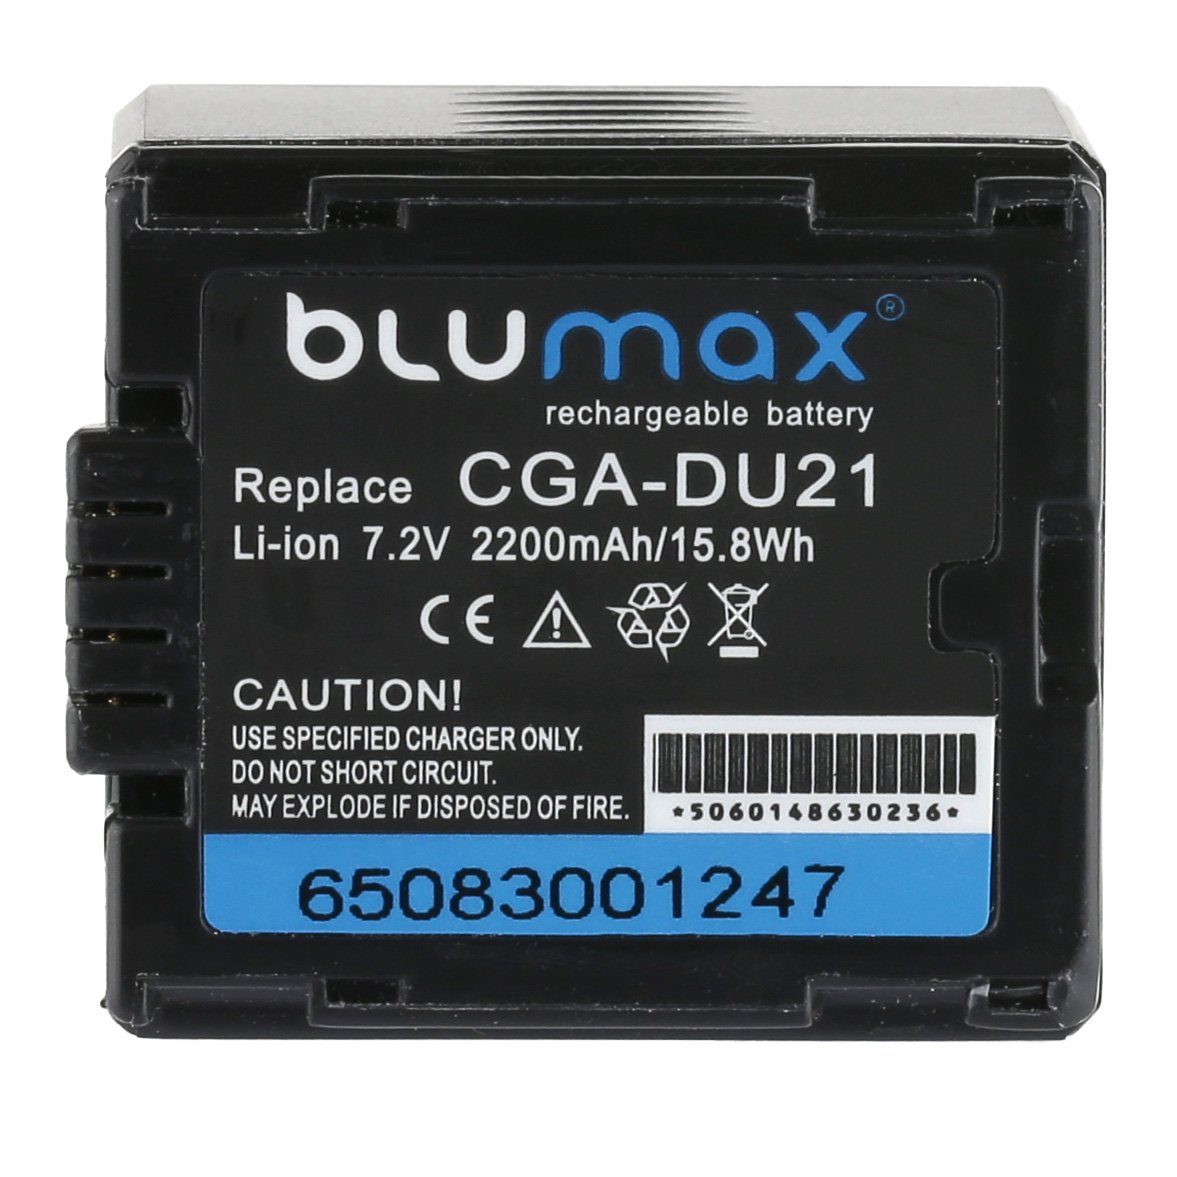 Blumax mAh 2200 CGA-DU21 2x Kamera-Akku